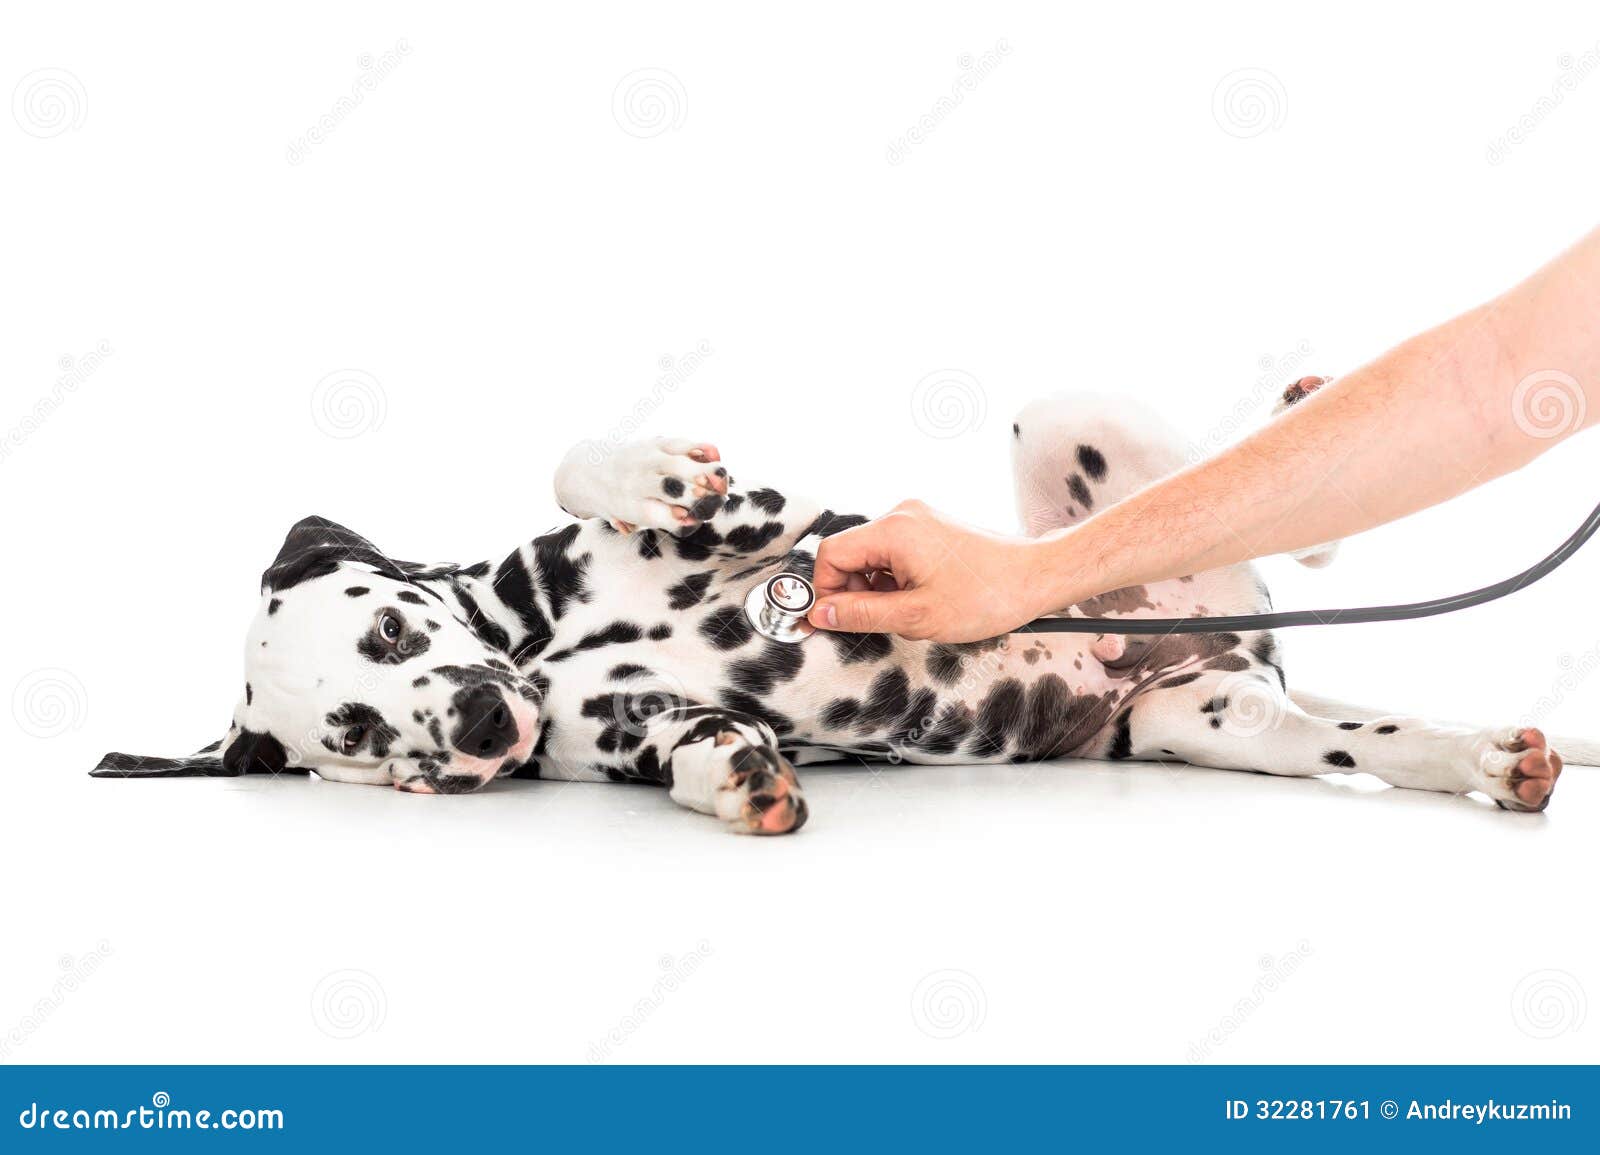 veterinary examination of dalmatian dog lying